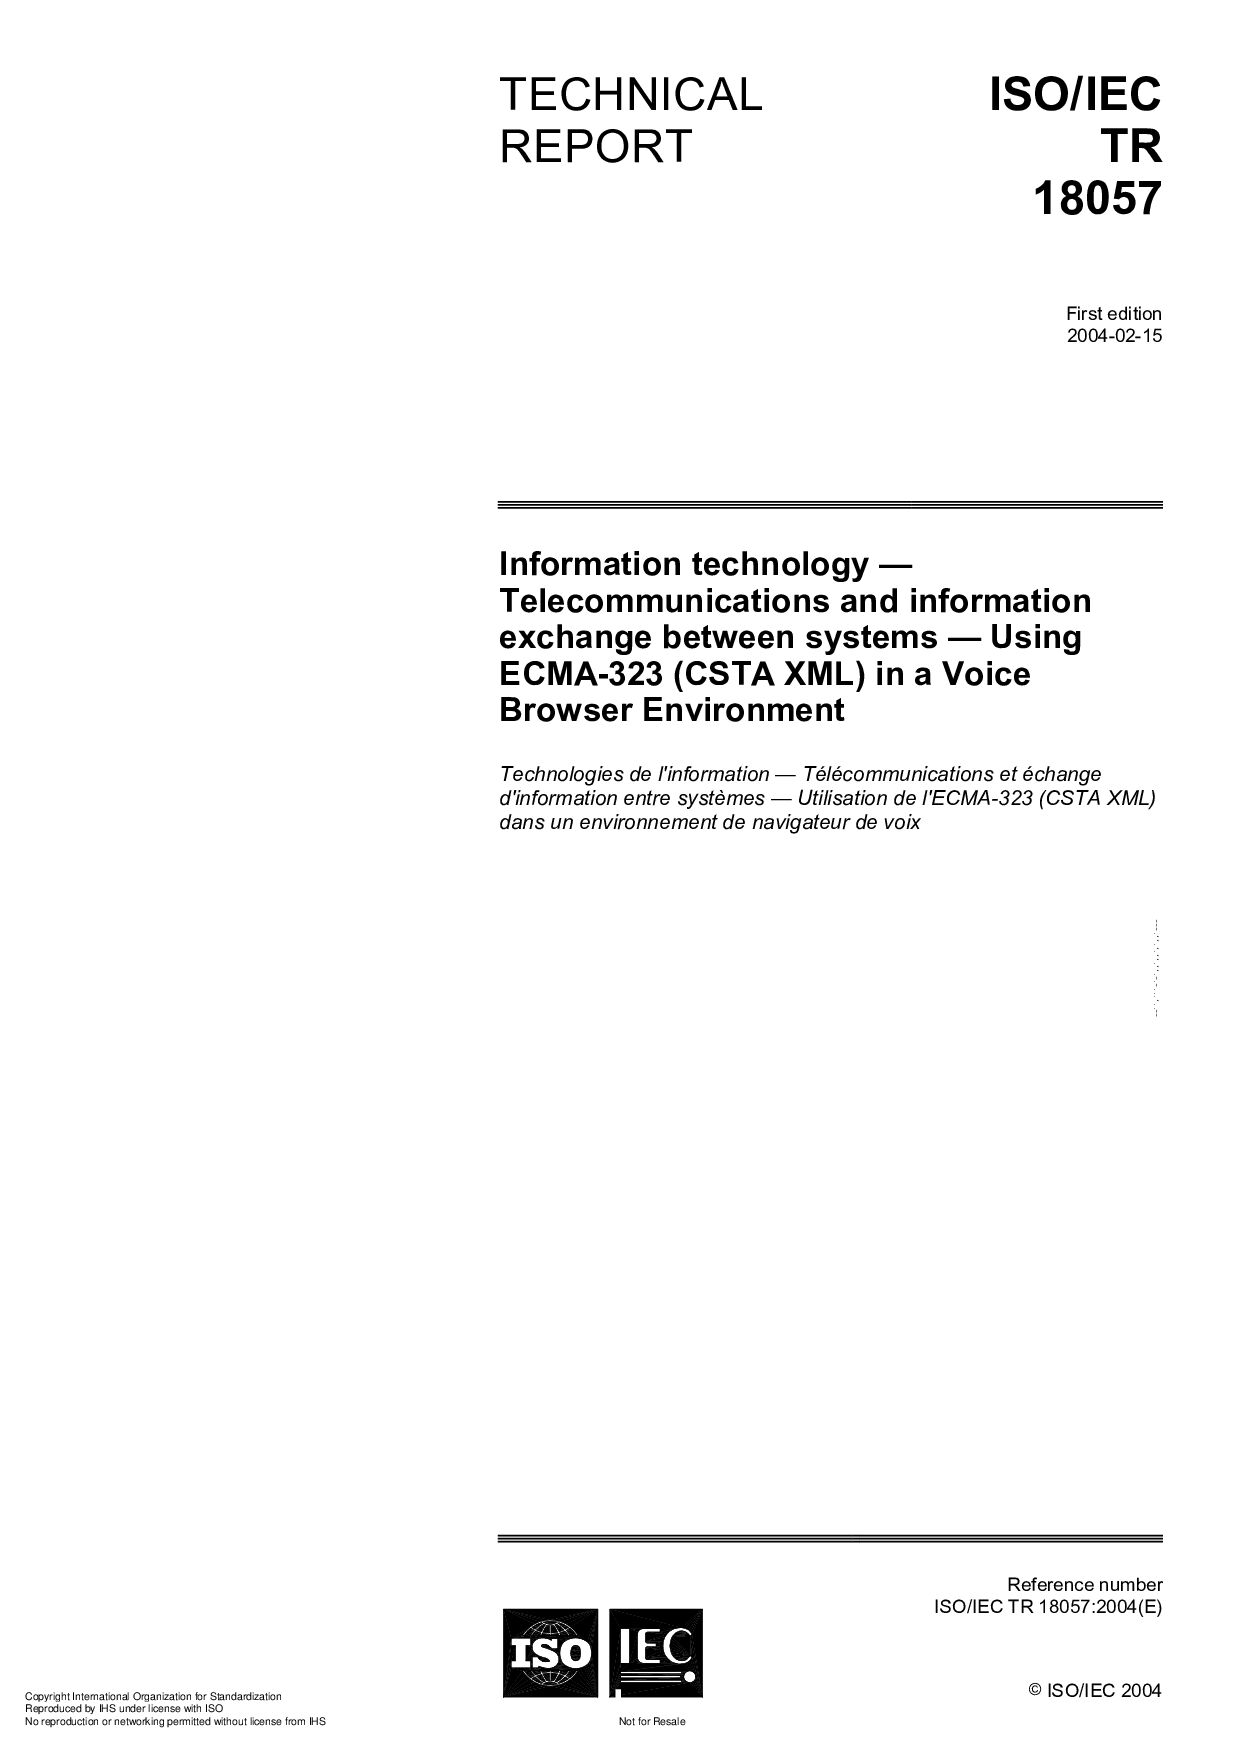 ISO/IEC TR 18057:2004